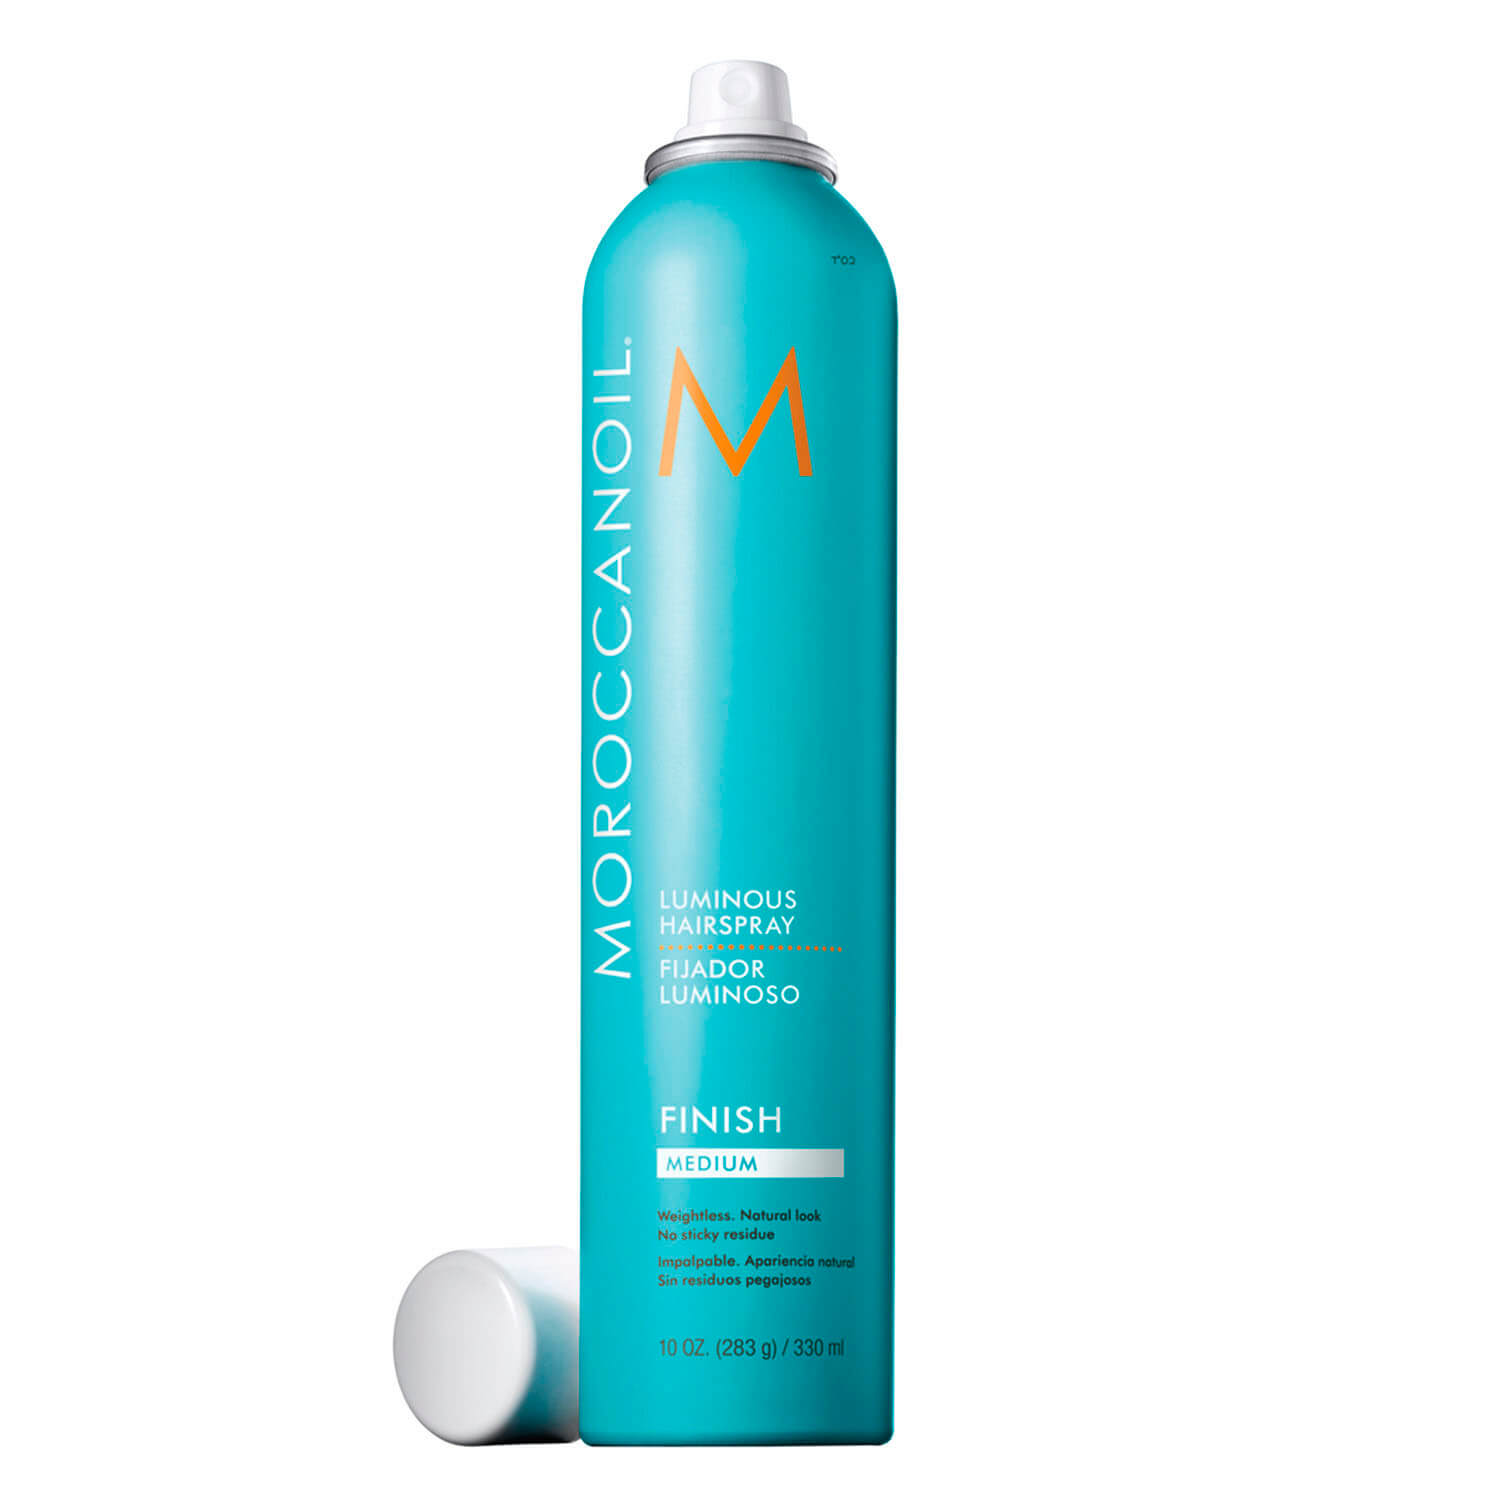 moroccanoil luminous hairspray travel size